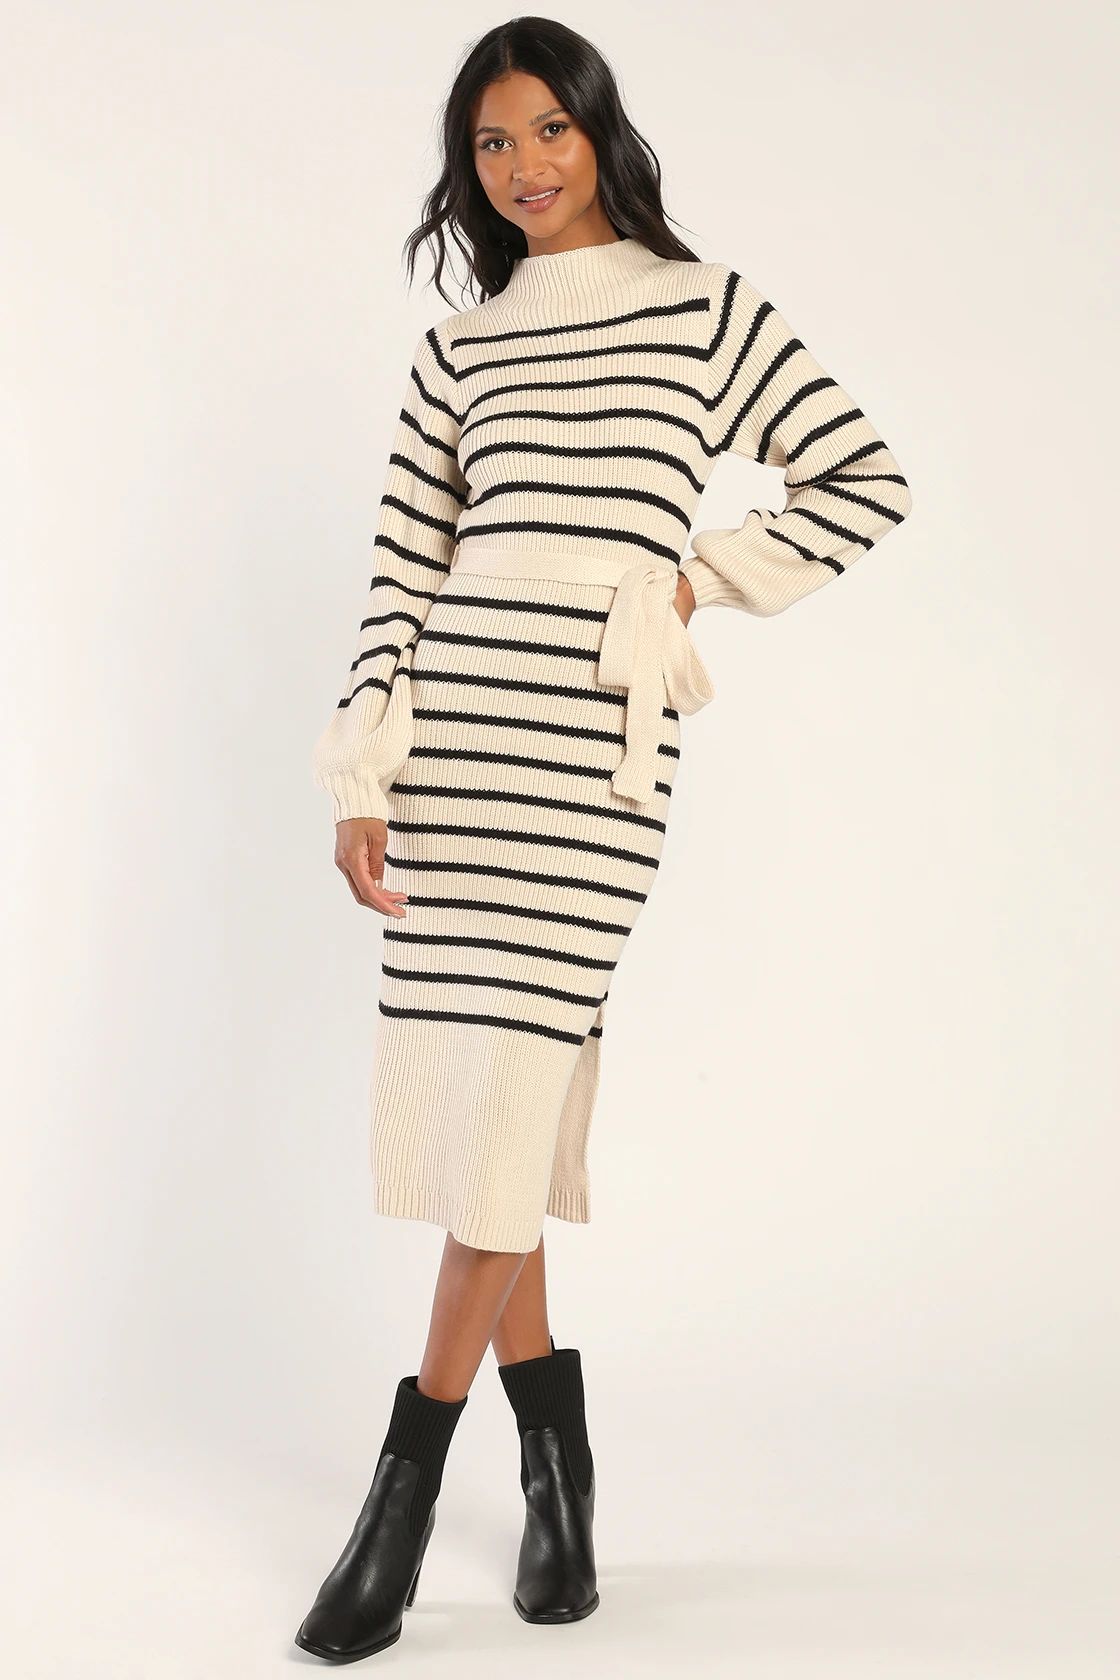 Stripe Things Up Cream Striped Mock Neck Bodycon Sweater Dress | Lulus